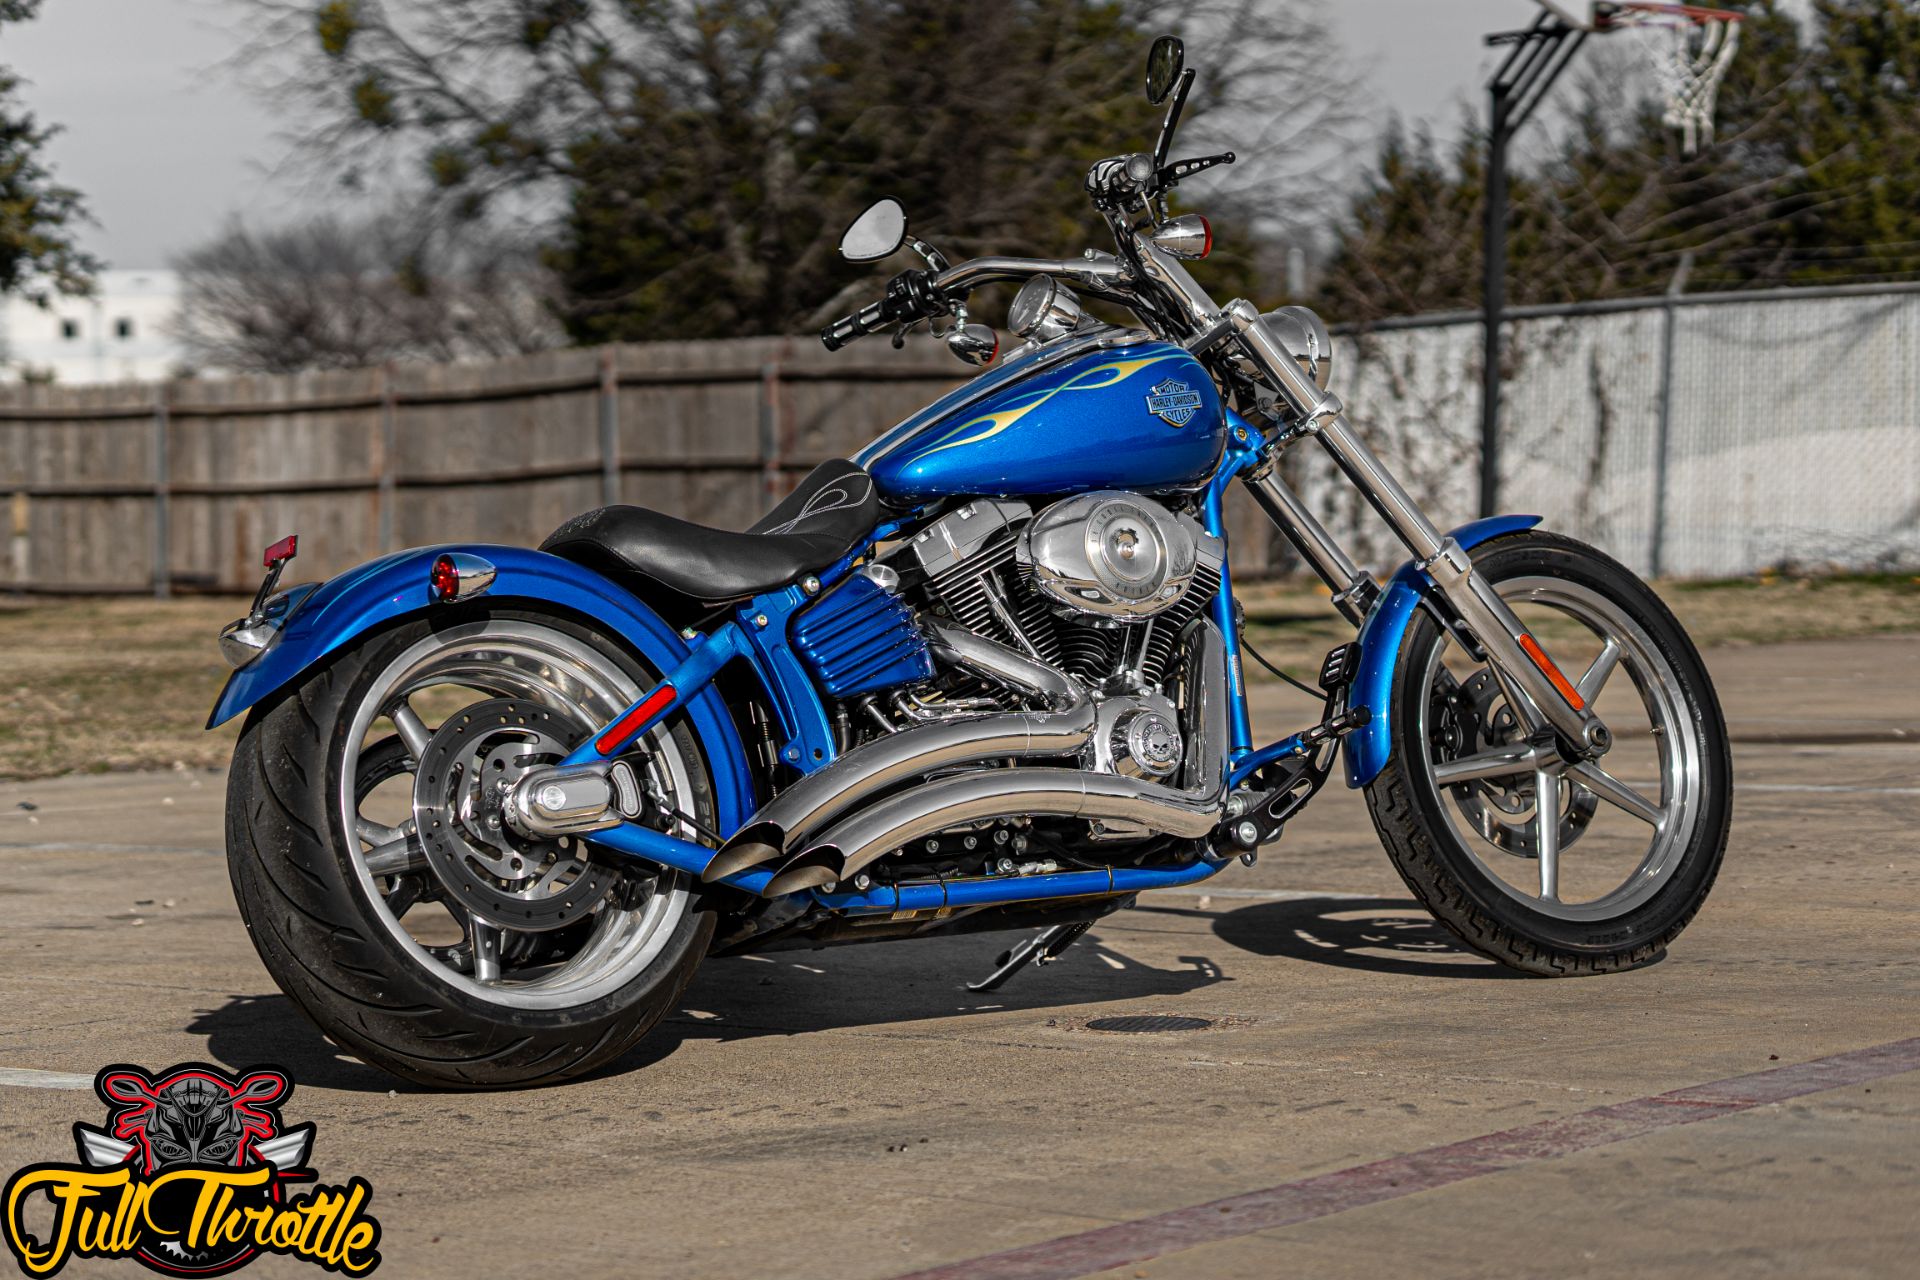 2008 Harley-Davidson Softail® Rocker™ in Lancaster, Texas - Photo 3